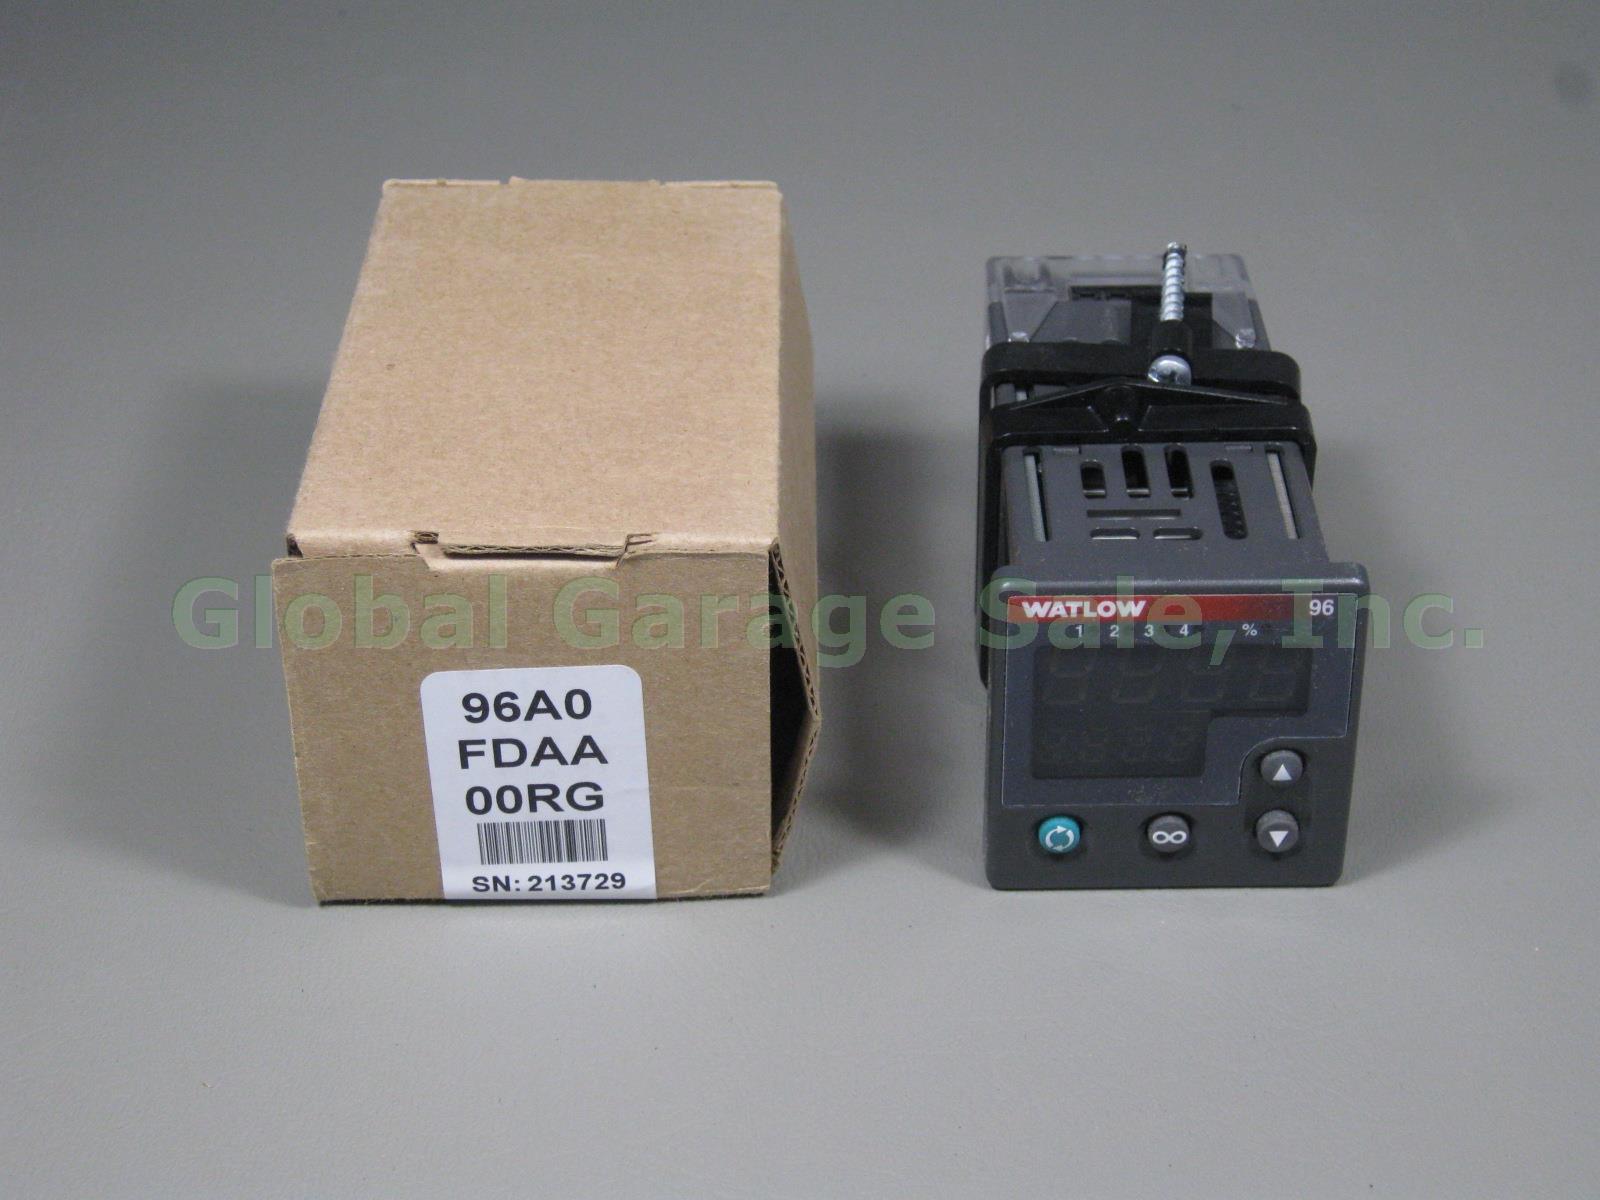 New Watlow 96A0 FDAA 00RG Series 96 1/16 DIN Dual Display Temperature Controller